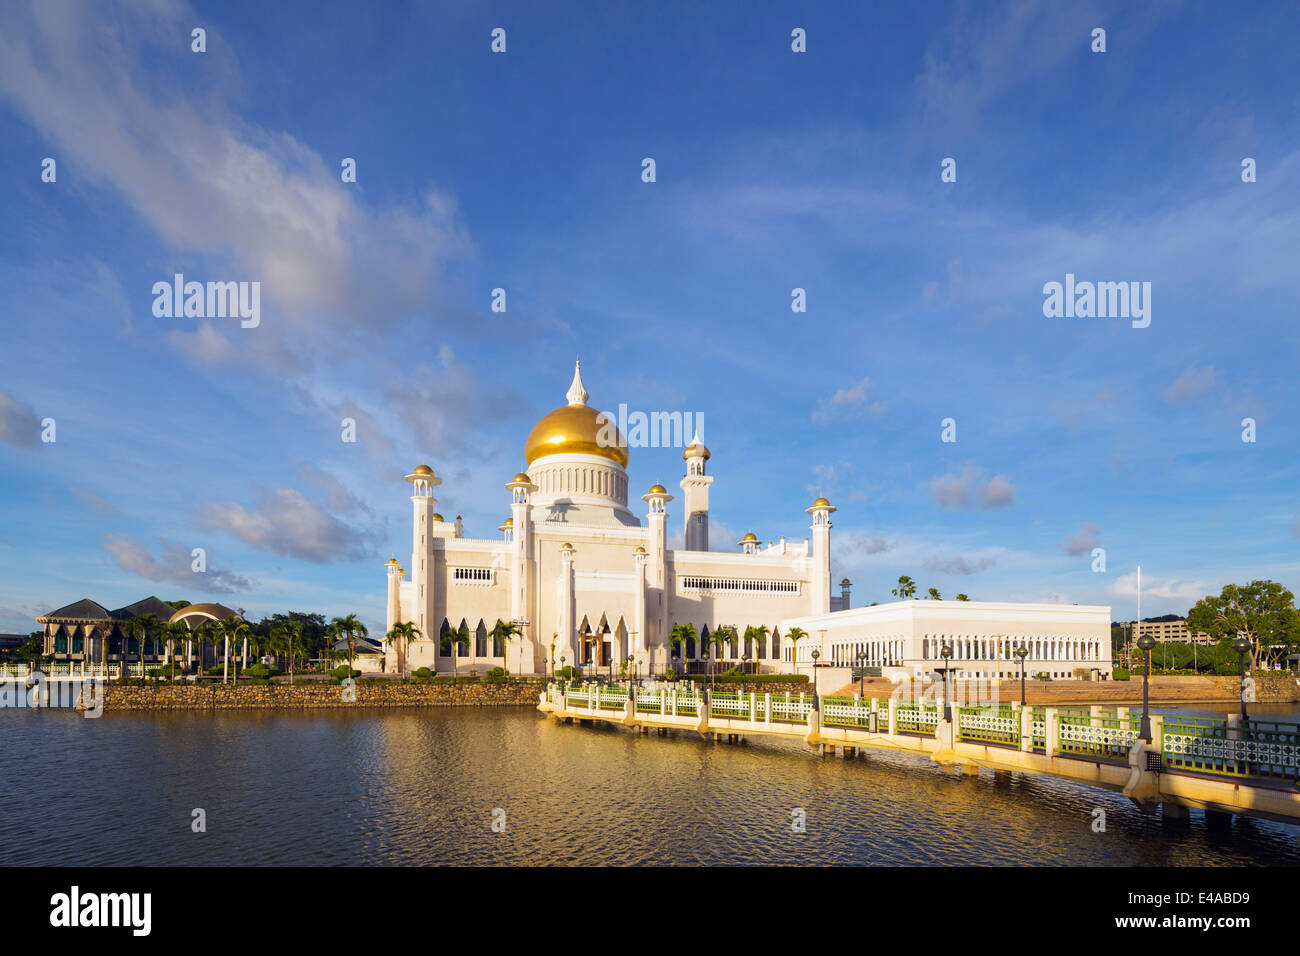 South East Asia, Kingdom of Brunei, Bandar Seri Begawan, Omar Ali Saifuddien Mosque Stock Photo